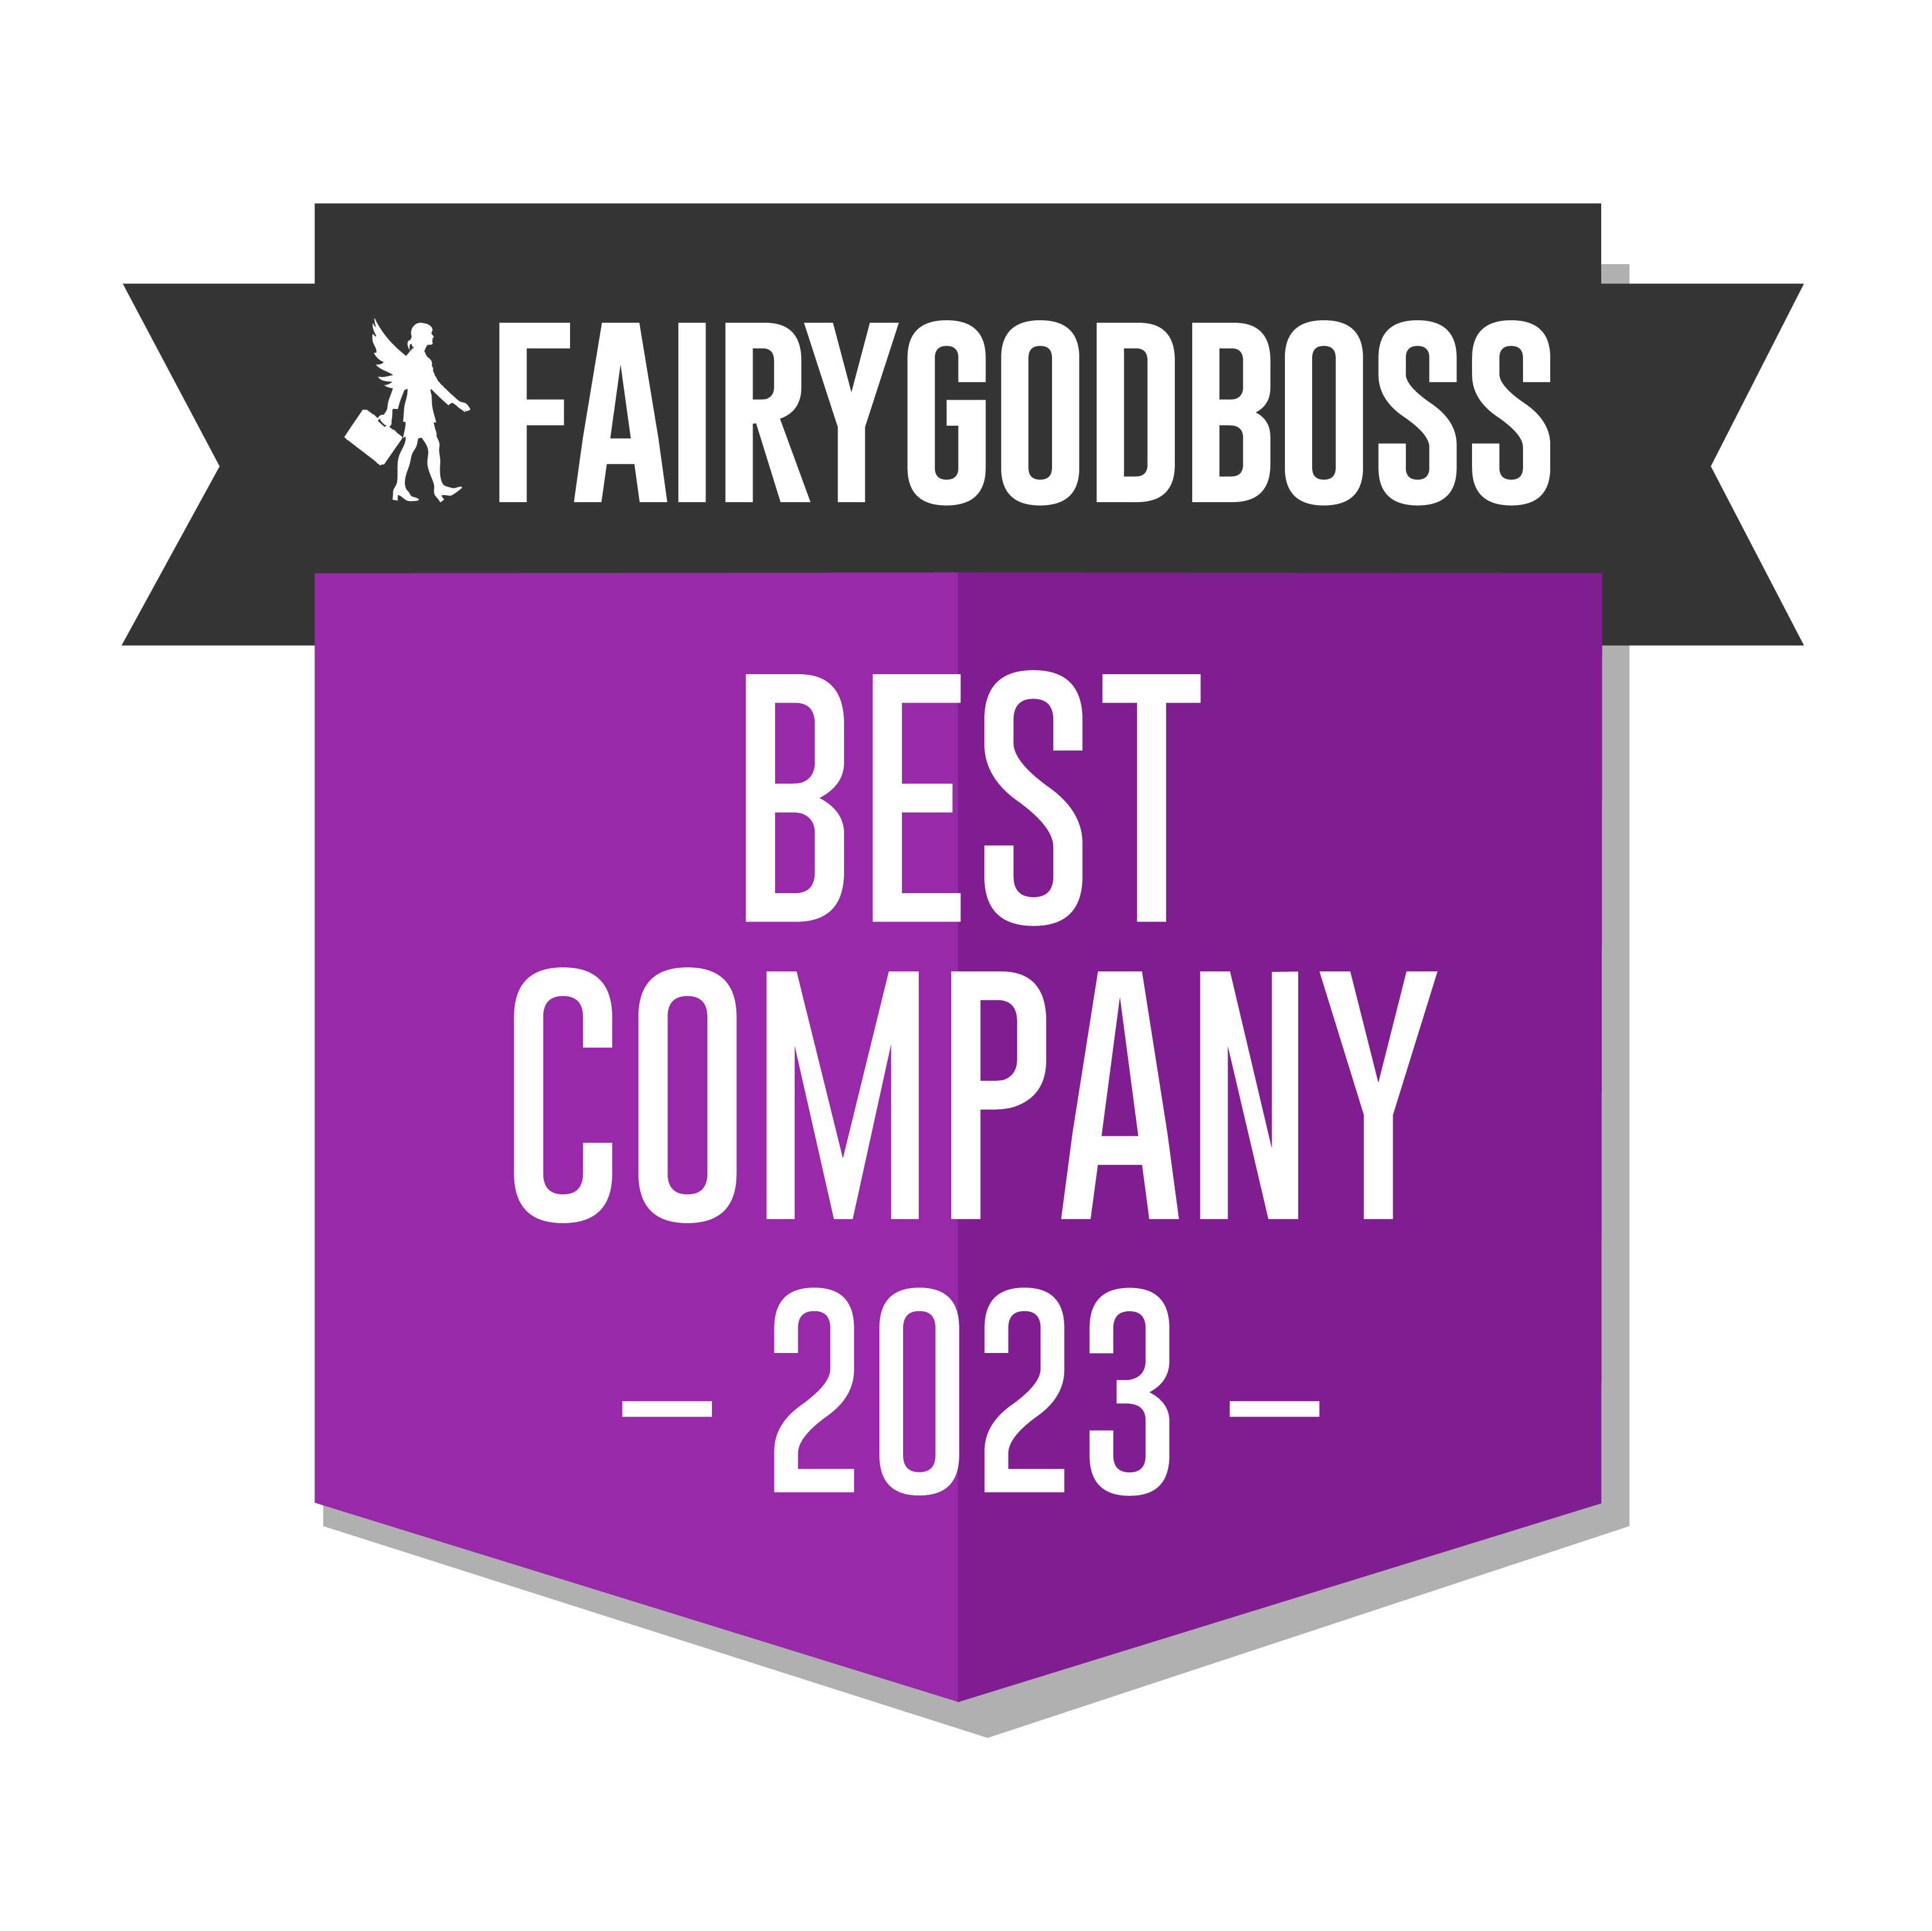 Fairy Good Boss Best Company 2023